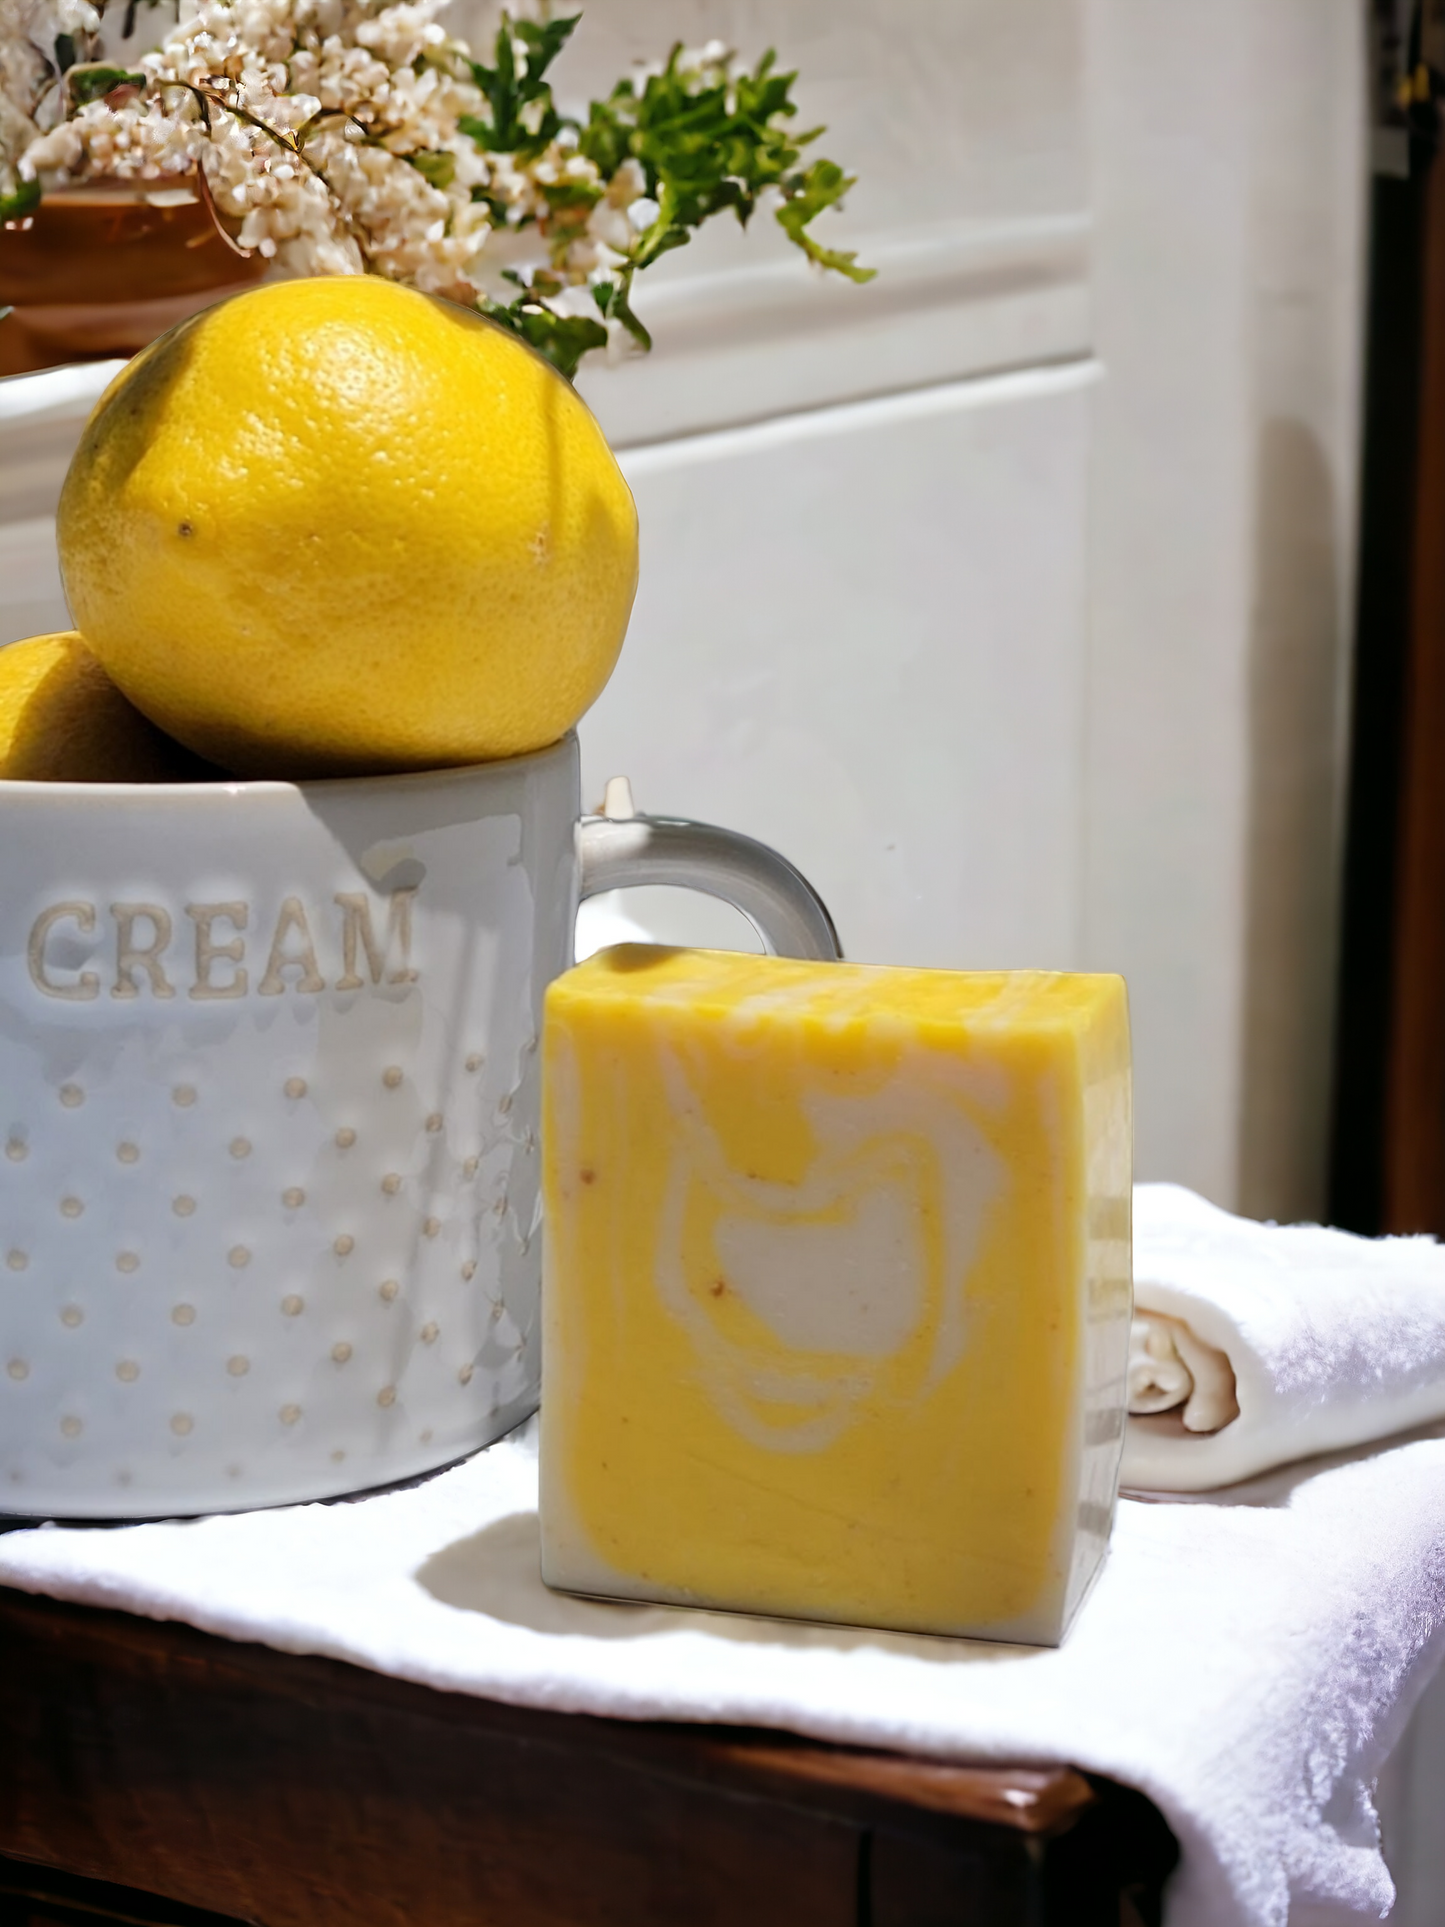 When Life Gives You Lemons - Goat Milk Soap 1 oz. Sample Bar